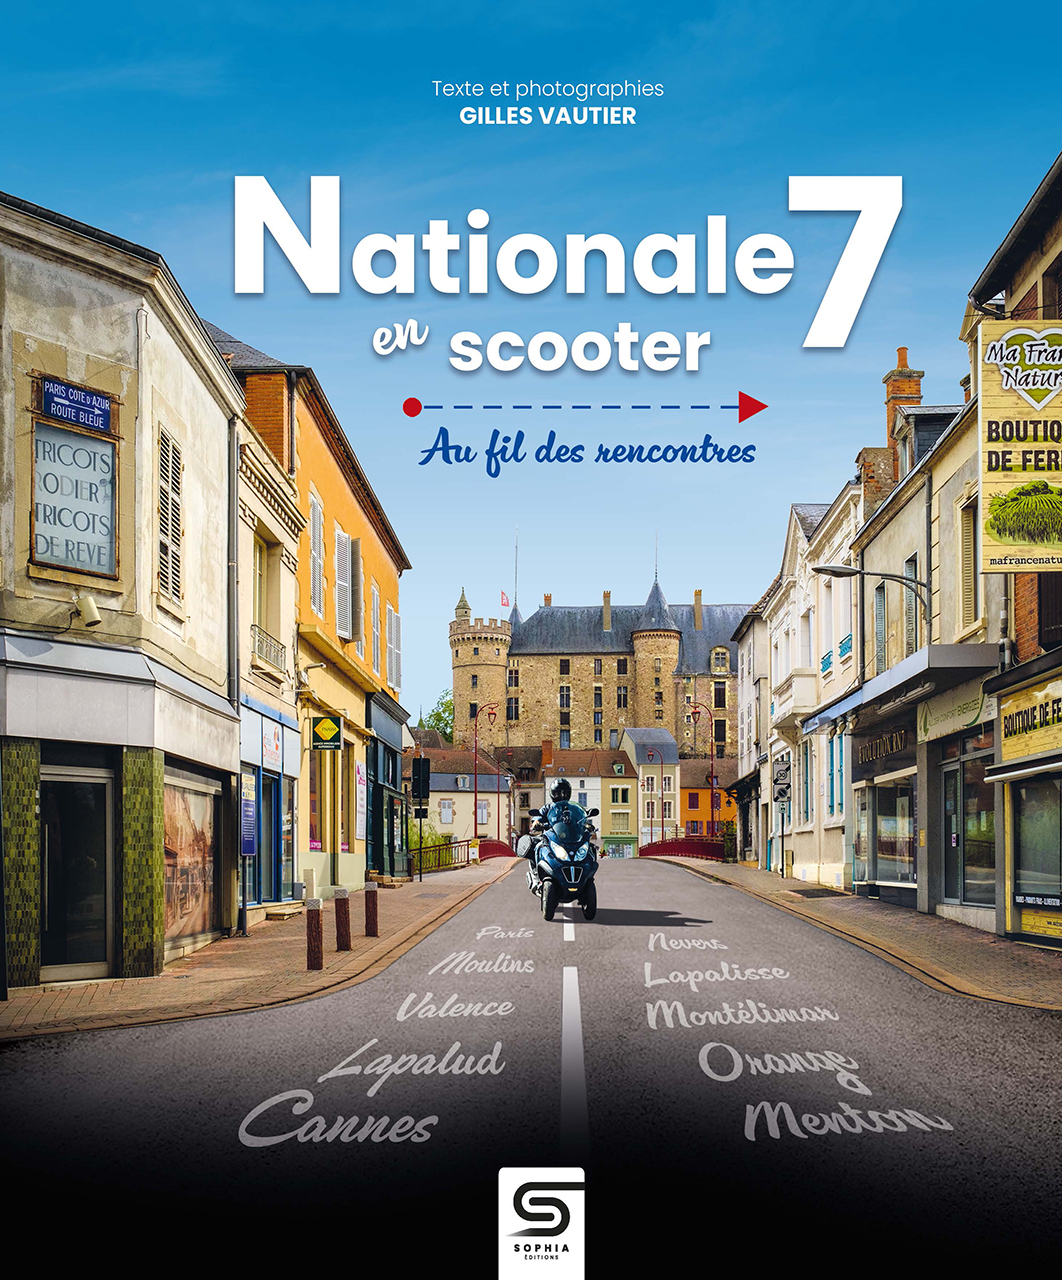 Nationale 7 road trip en scooter